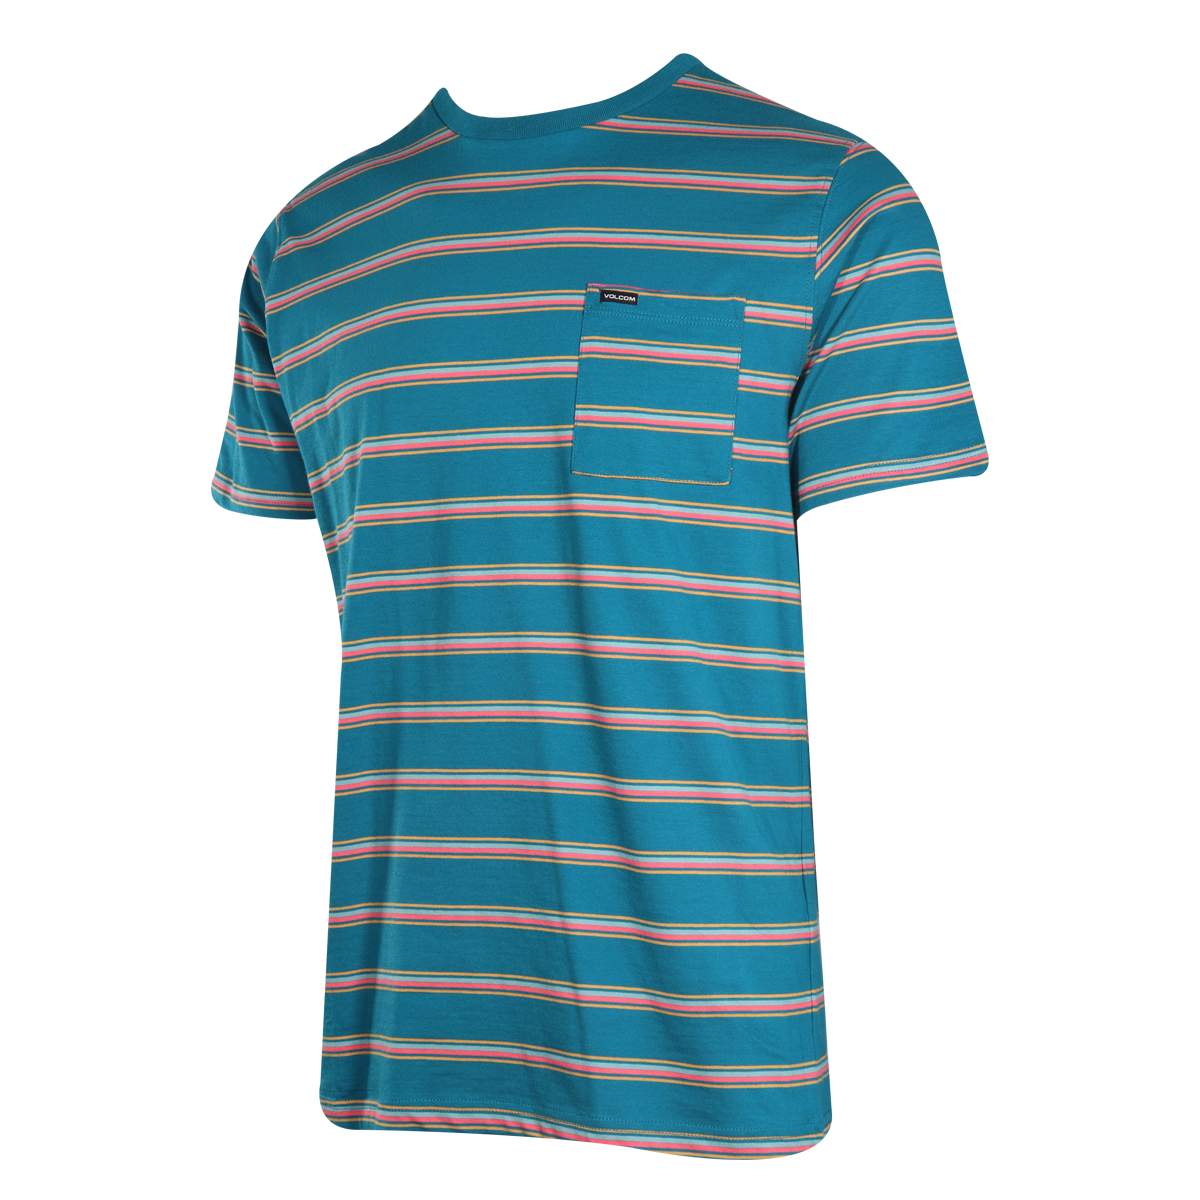 Volcom Men's T-Shirt Ocean Teal Striped S/S Tee (S33)